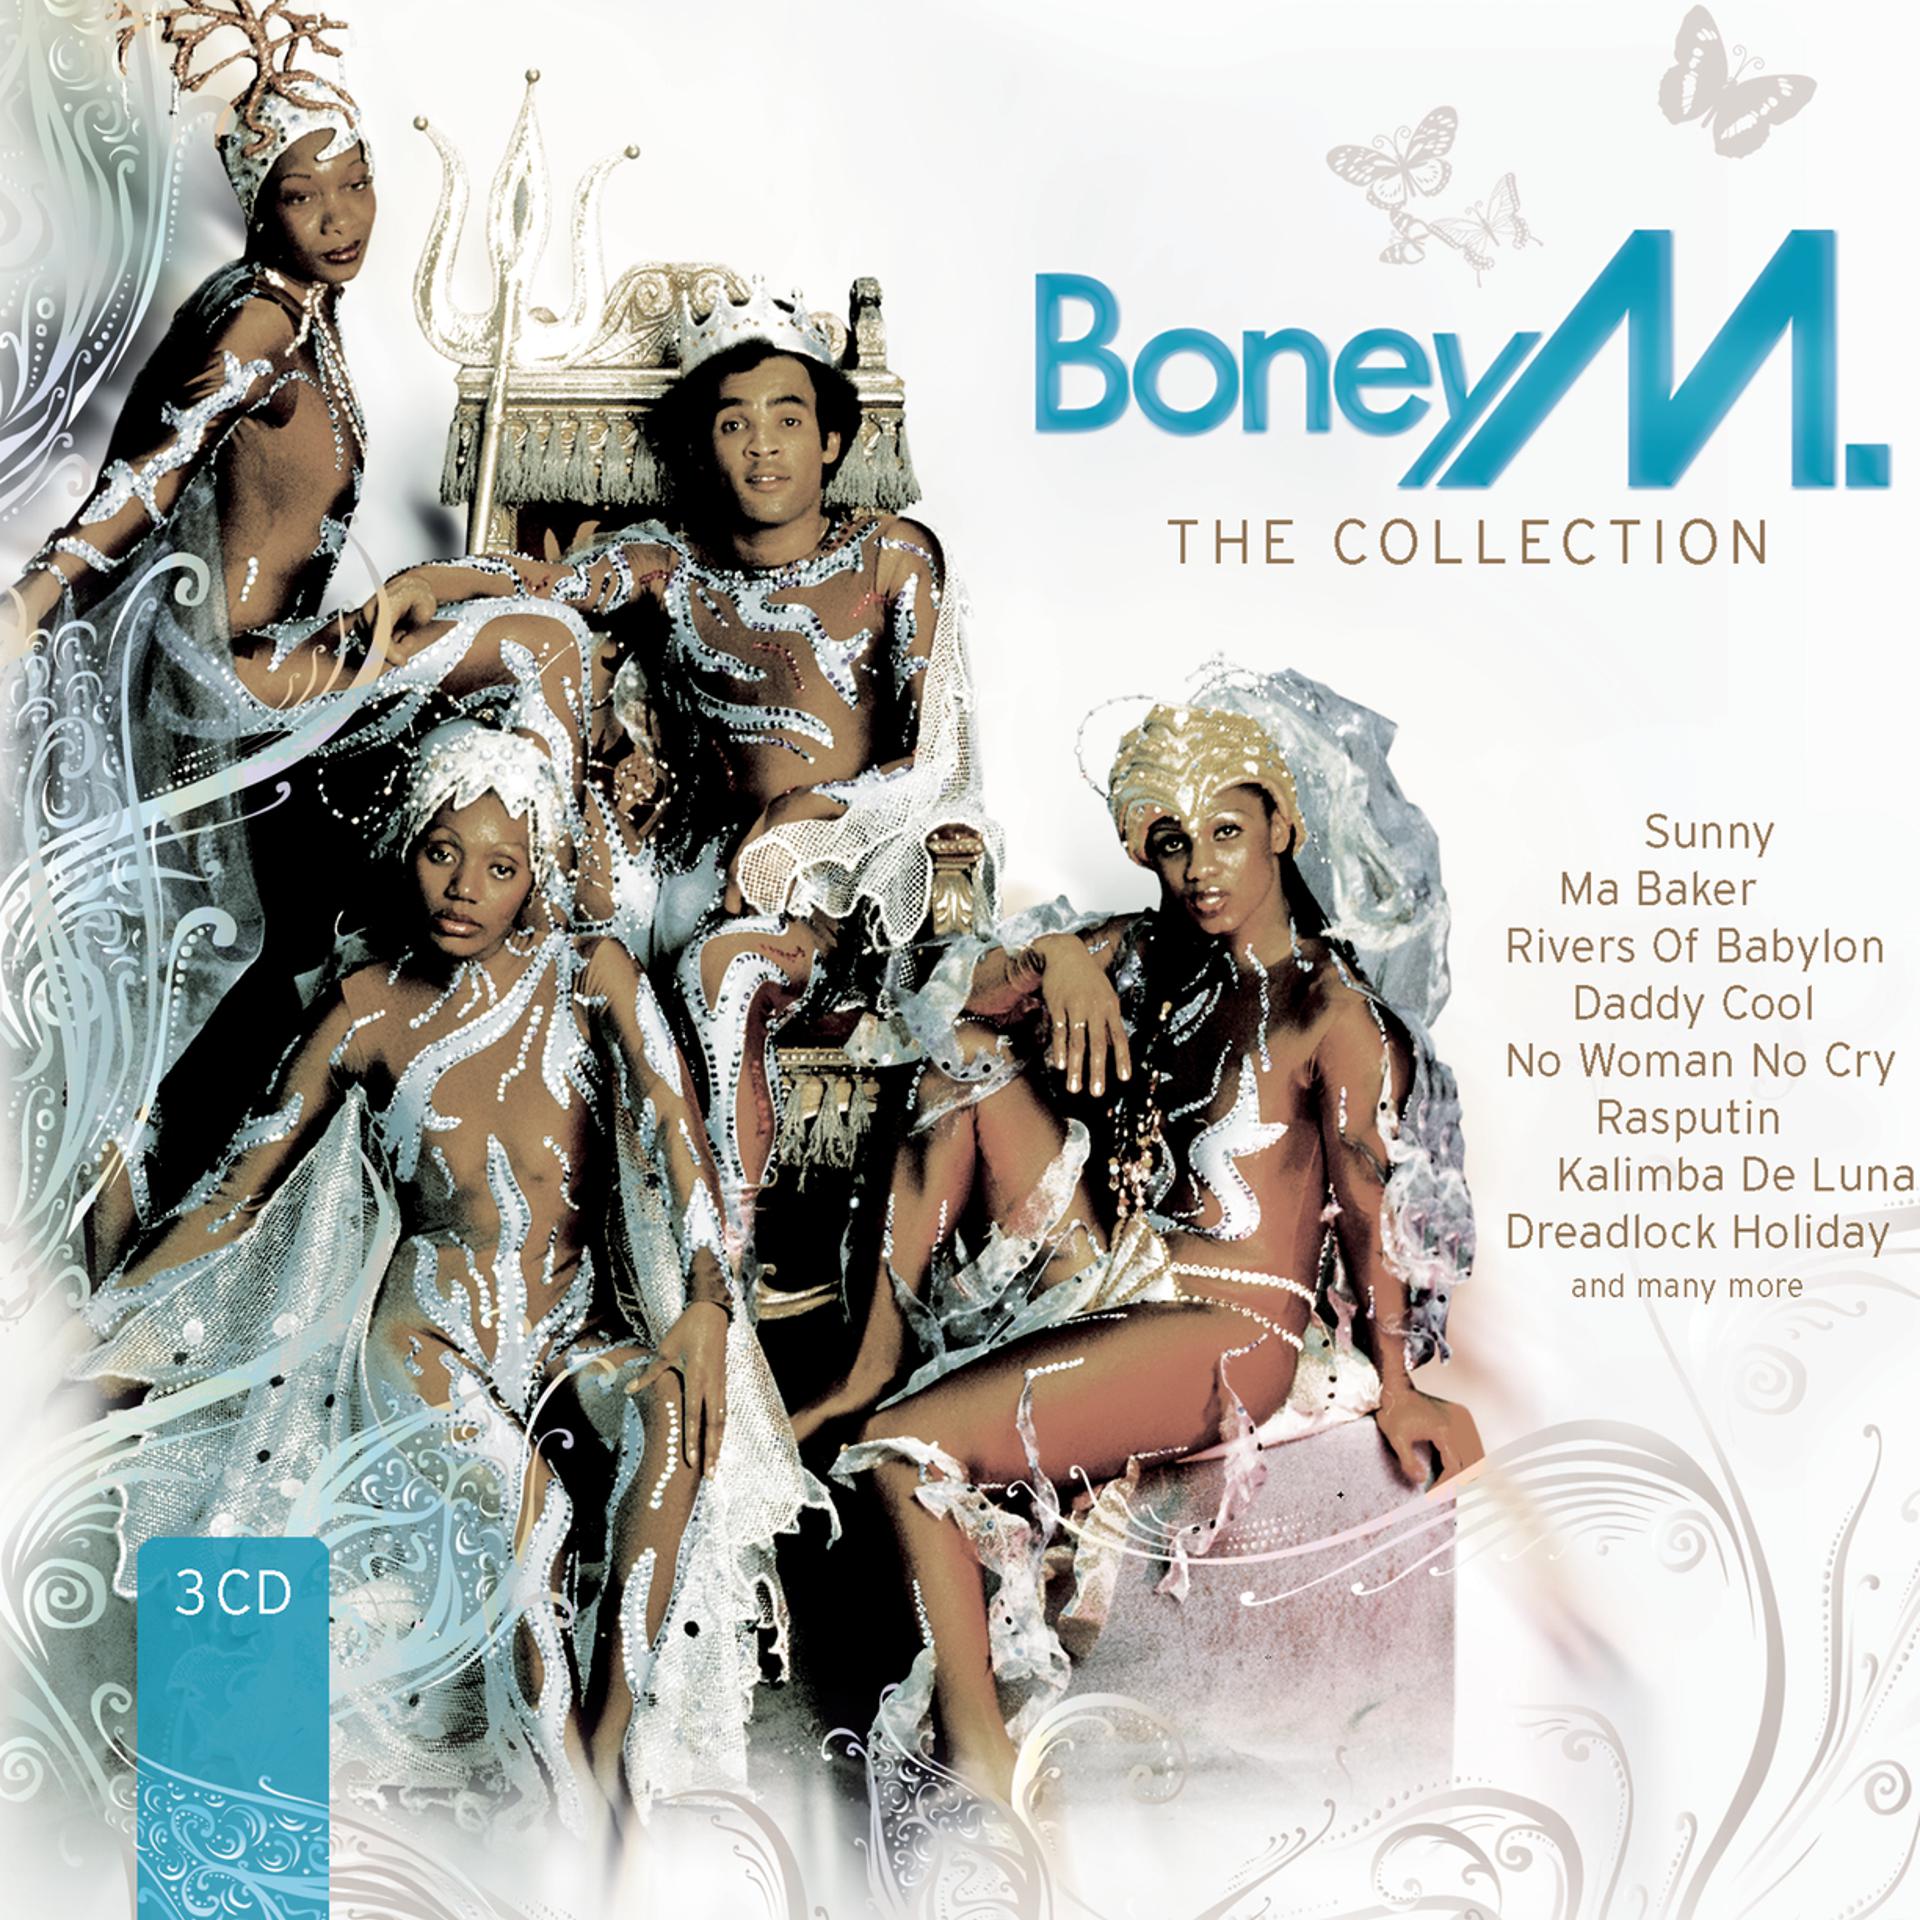 Boney m mp3 collection CD обложка. Группа Boney m. в 80. Boney m Sunny обложка. Boney m - 2008 - the collection album.